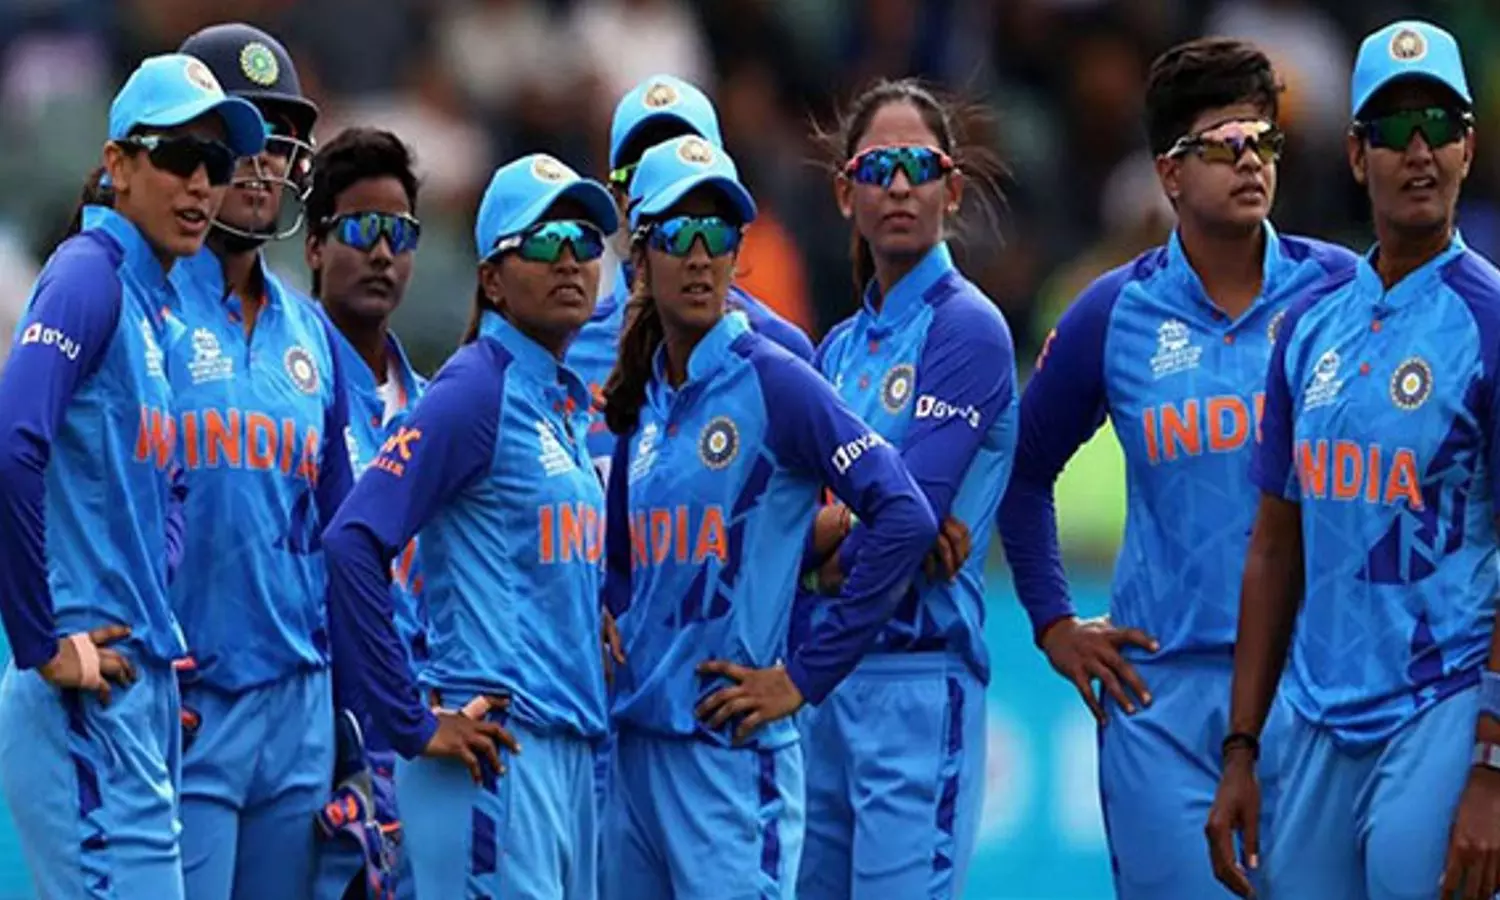 Women Cricketers